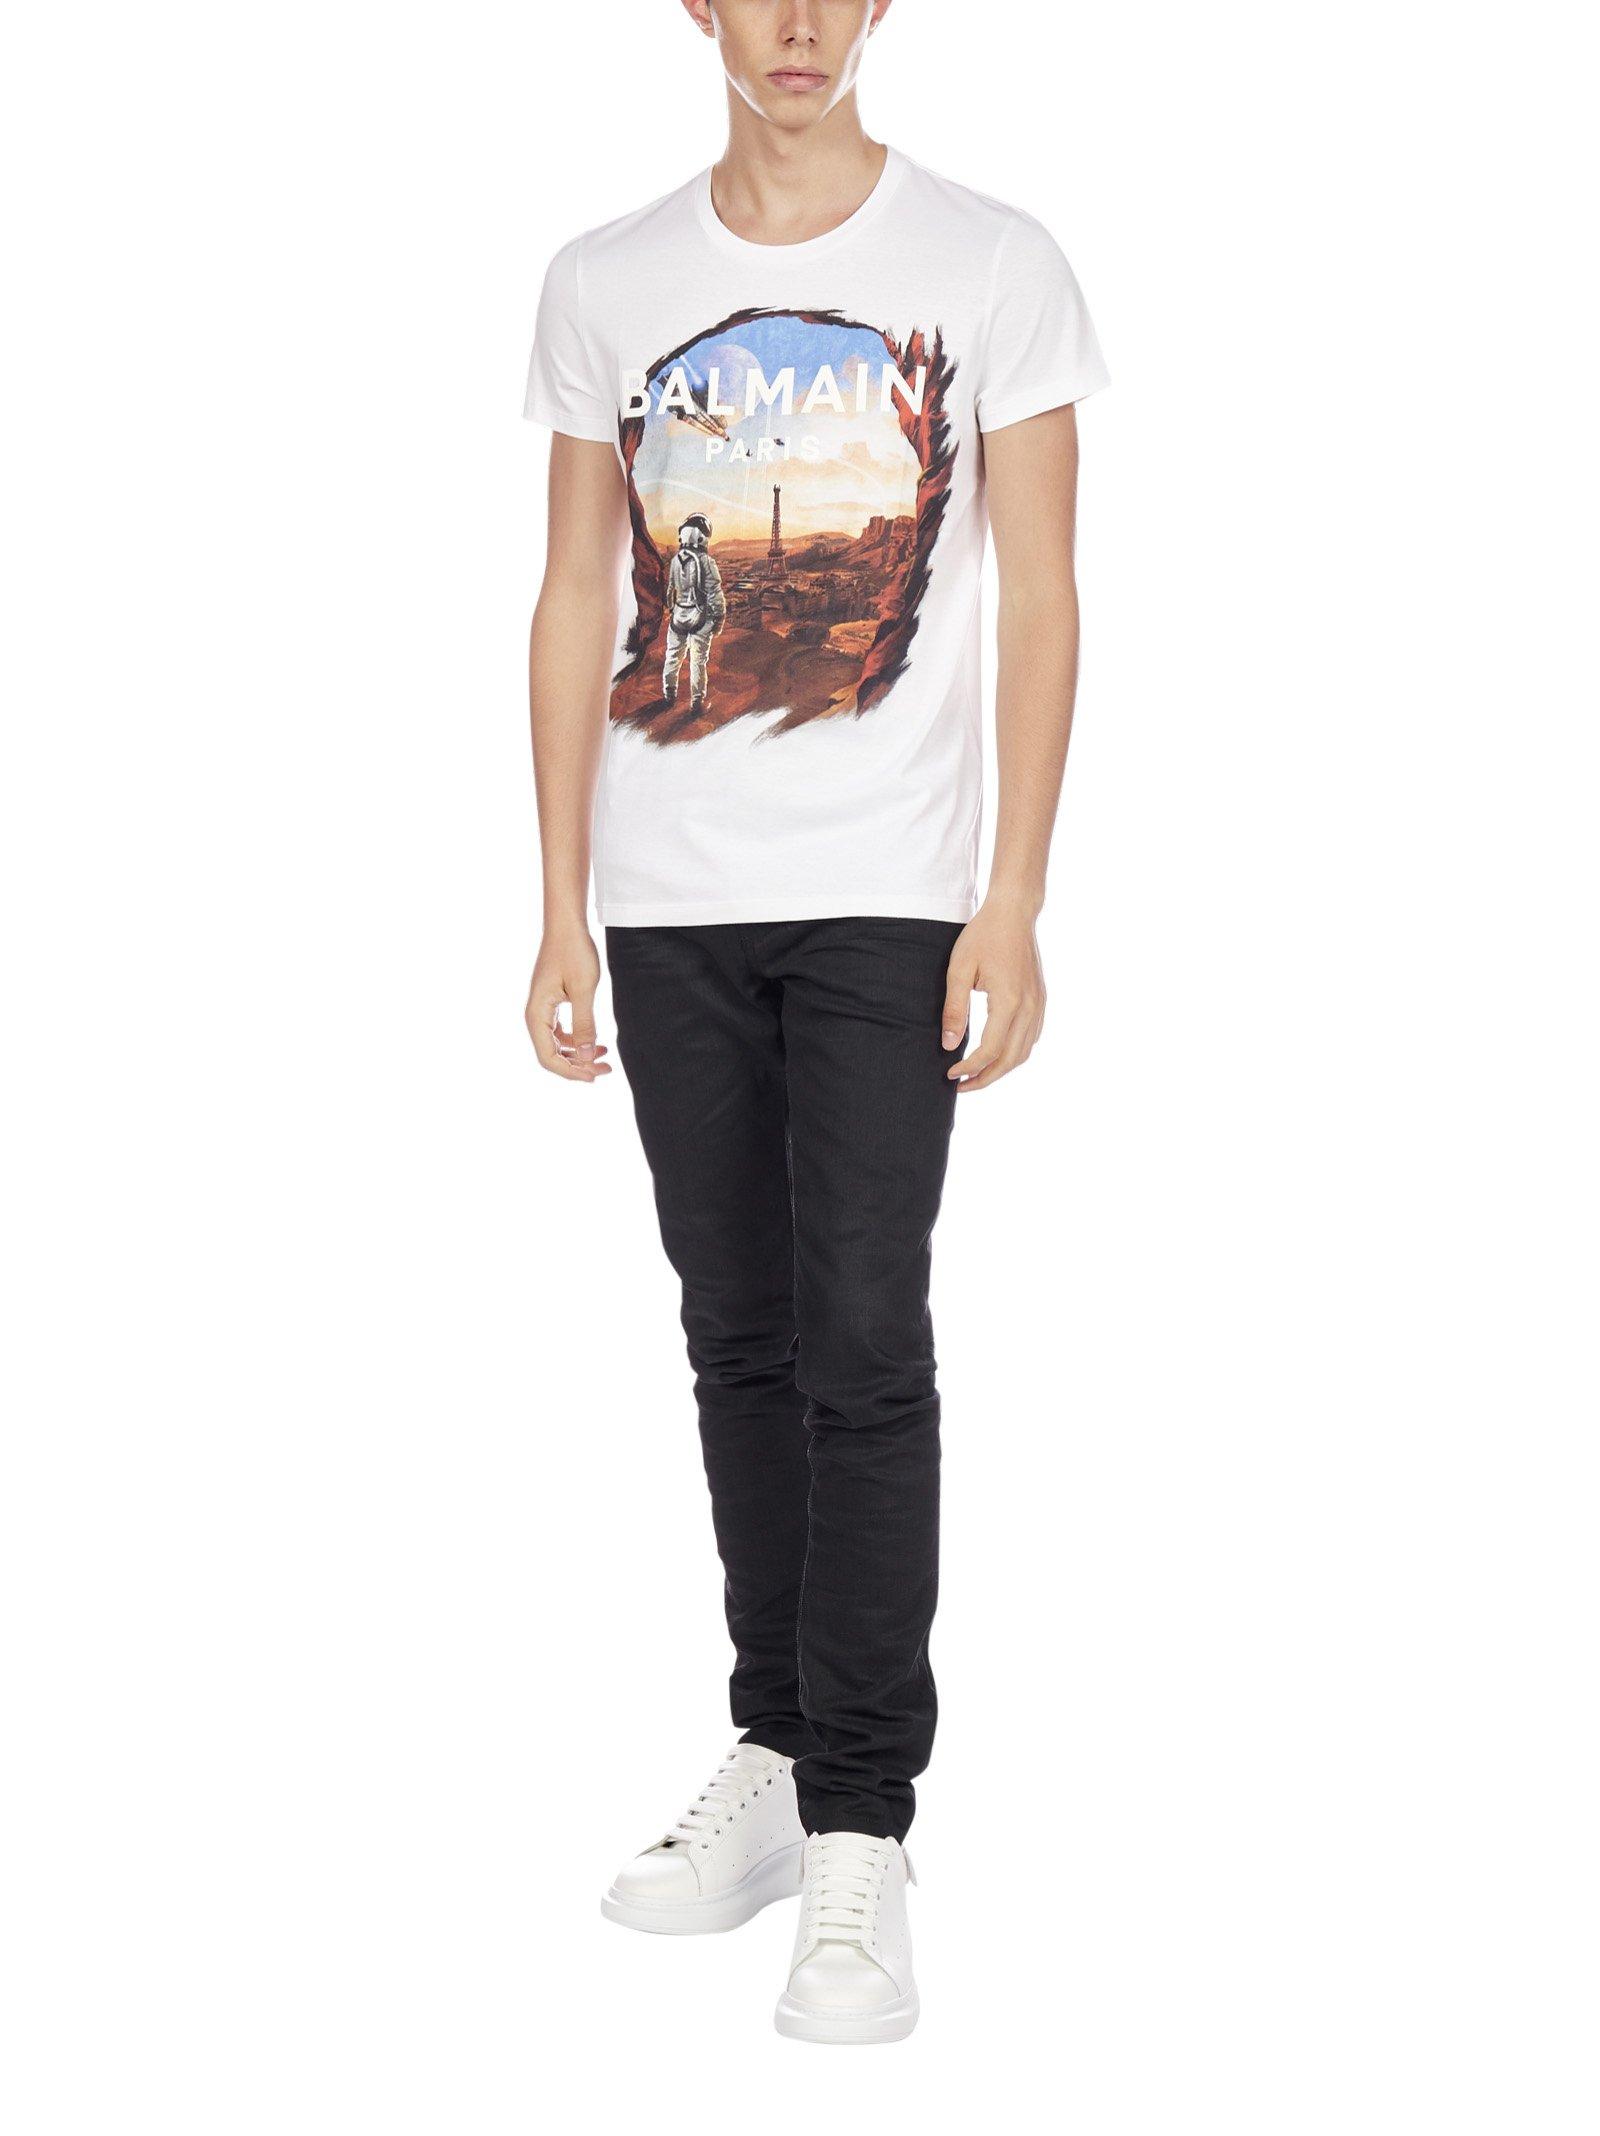 Louis Vuitton - Astronaut Tee, Men's Fashion, Tops & Sets, Tshirts